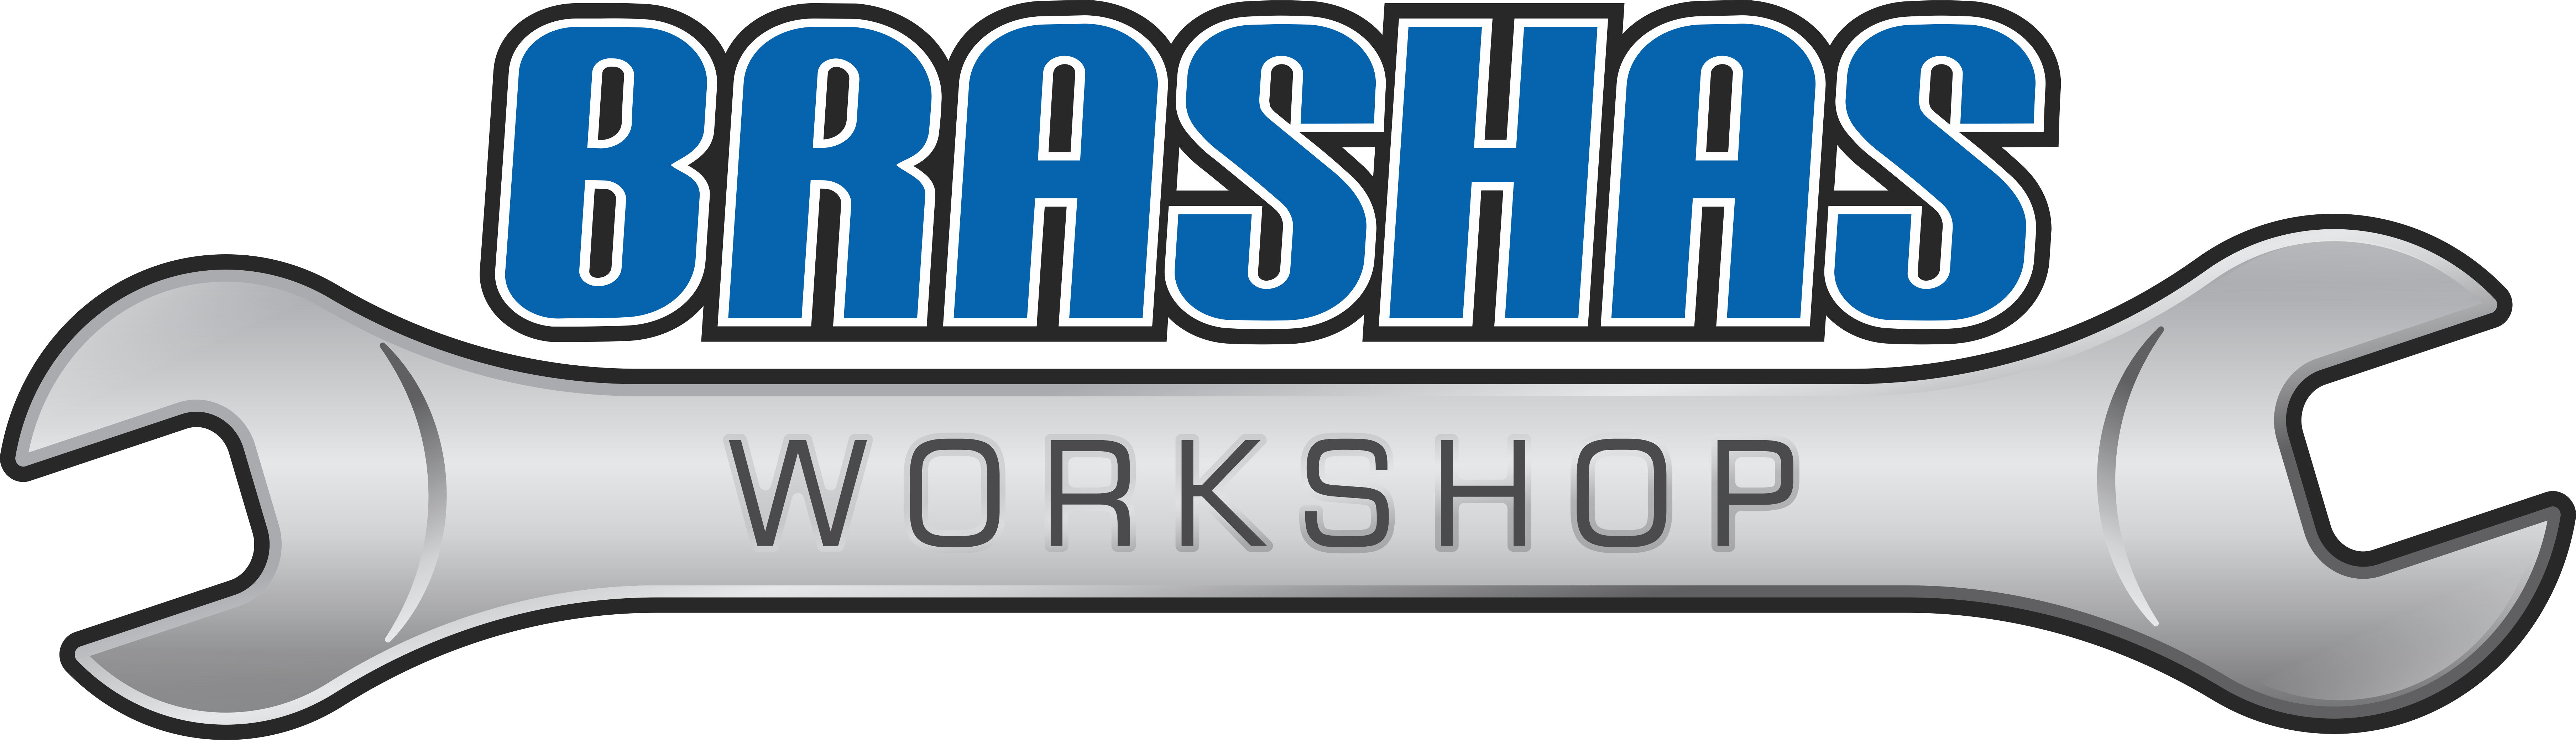 brashas-workshop